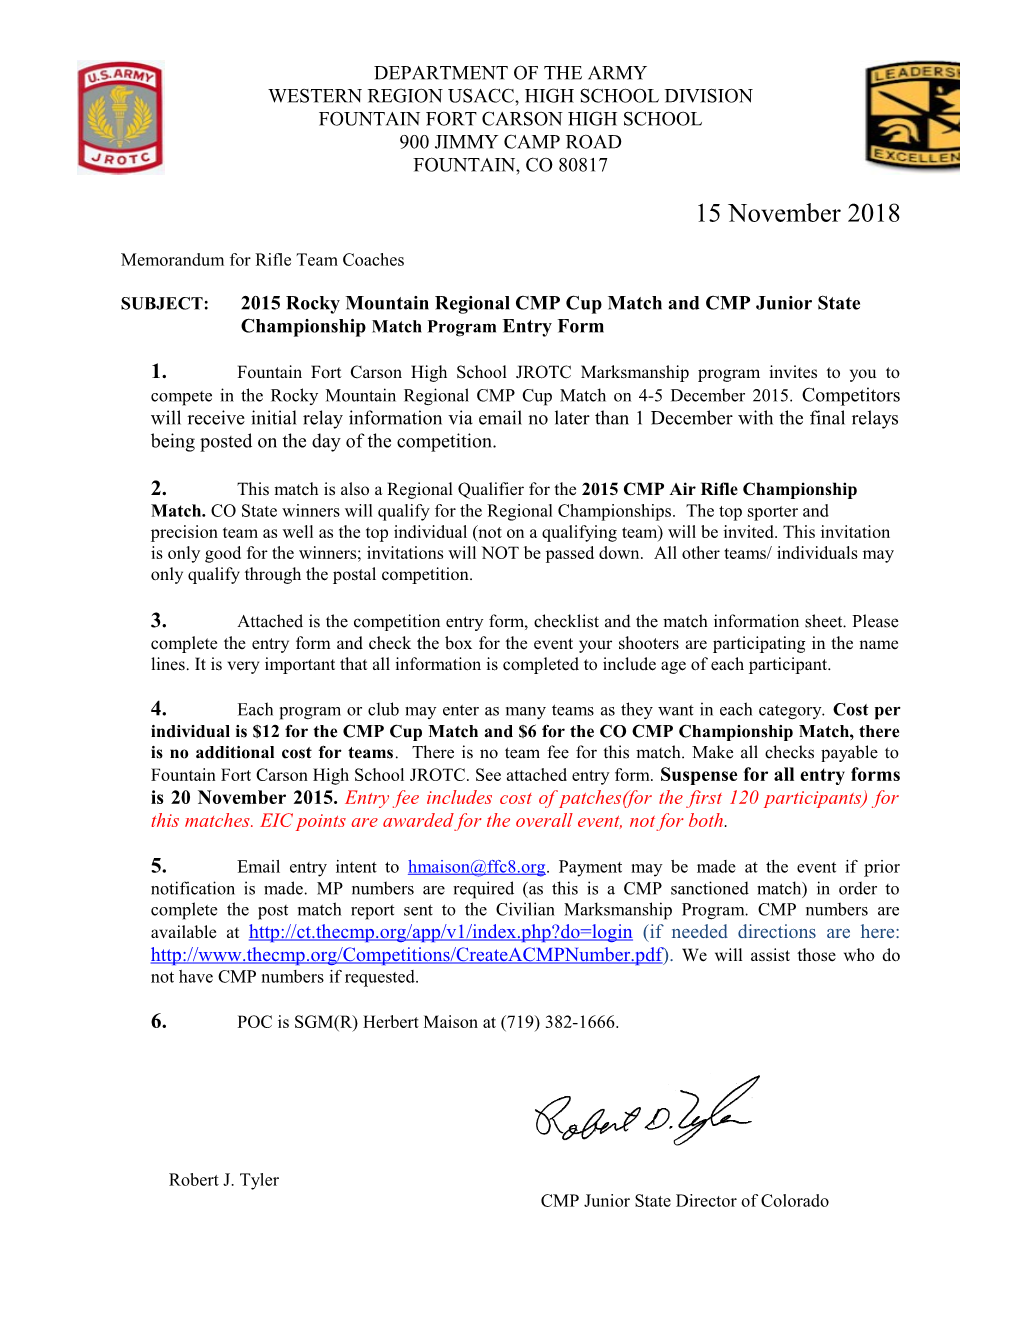 Memorandum for All JROTC Rifle Team Coaches